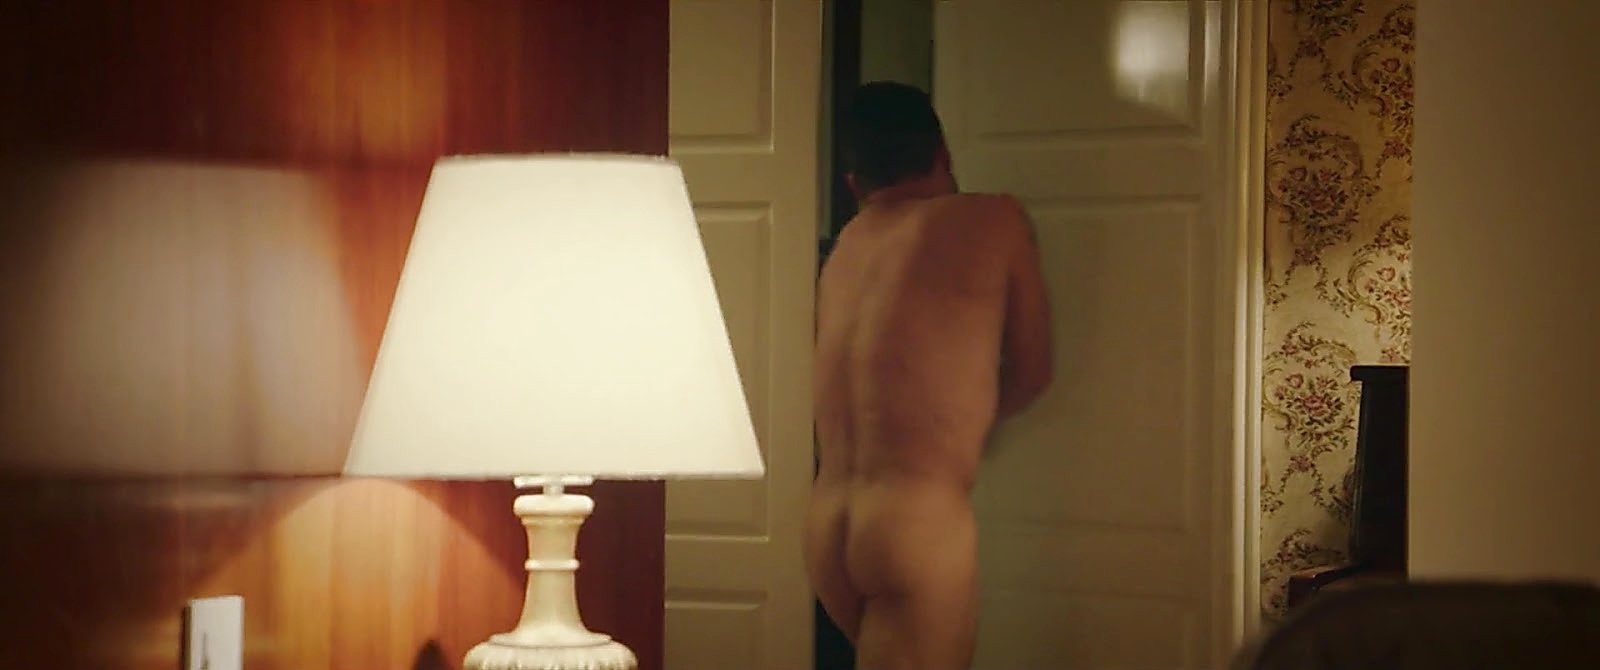 Omar Chaparro sexy shirtless scene December 12, 2019, 11am